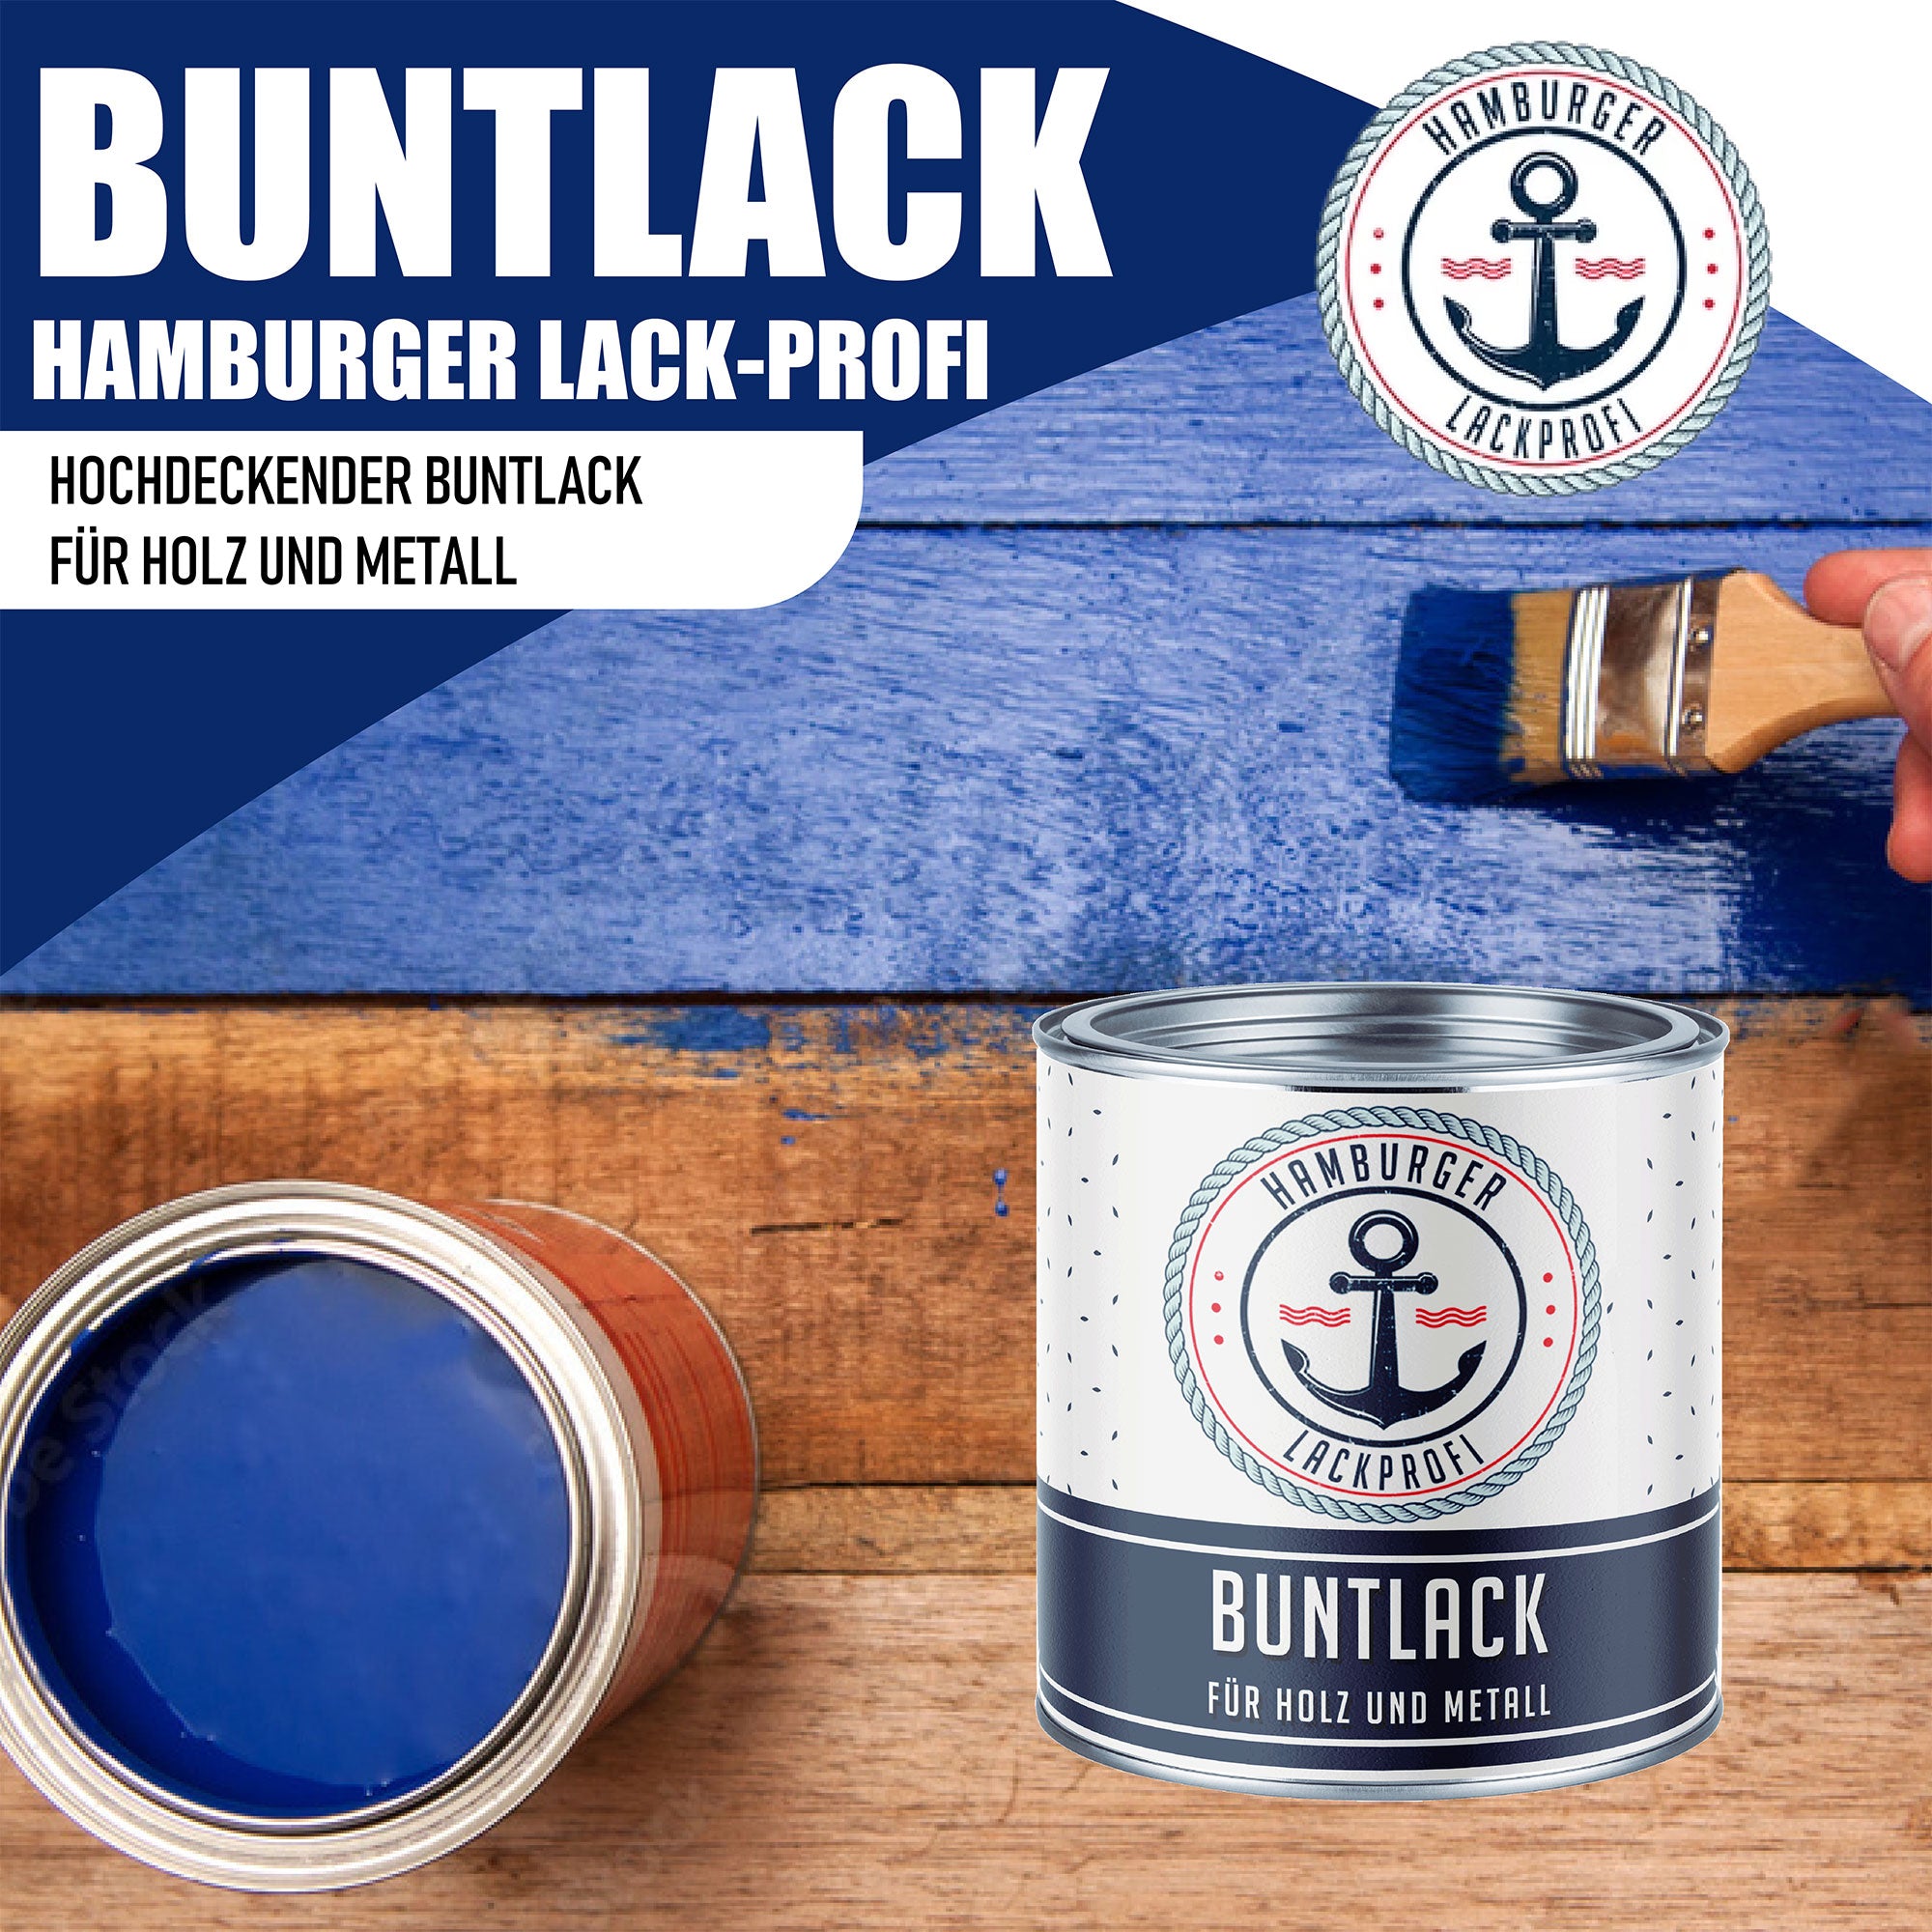 Hamburger Lack-Profi Buntlack Braungrau RAL 7013 - Robuster Kunstharzlack